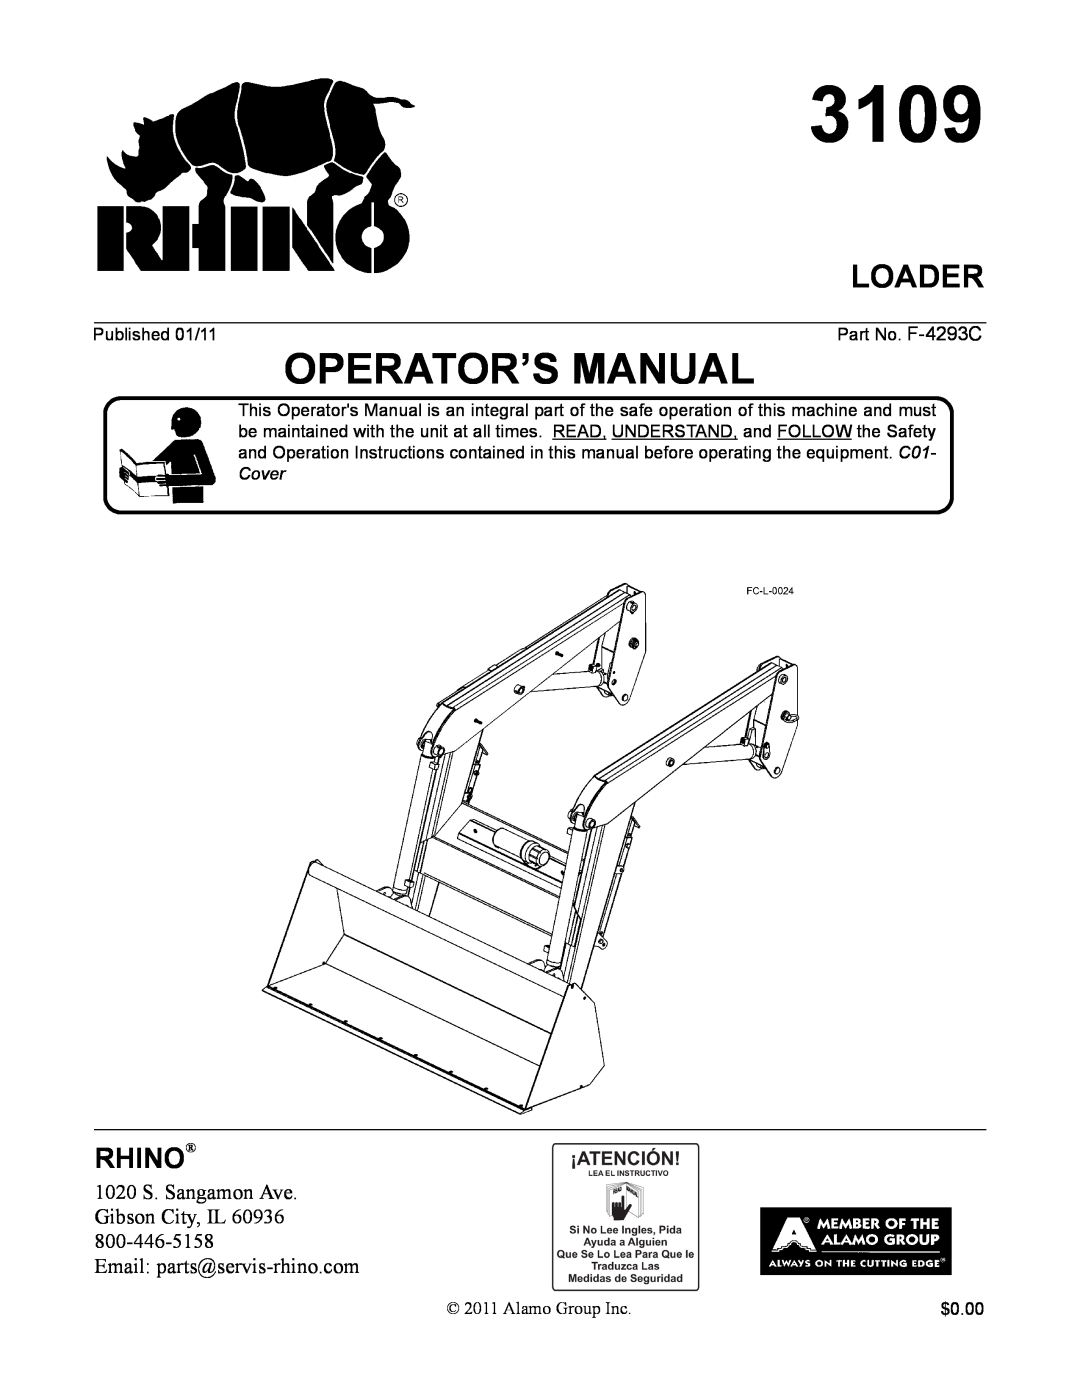 Alamo 3109 manual Loader, Operator’S Manual, Rhino, 1020 S. Sangamon Ave Gibson City, IL 60936 